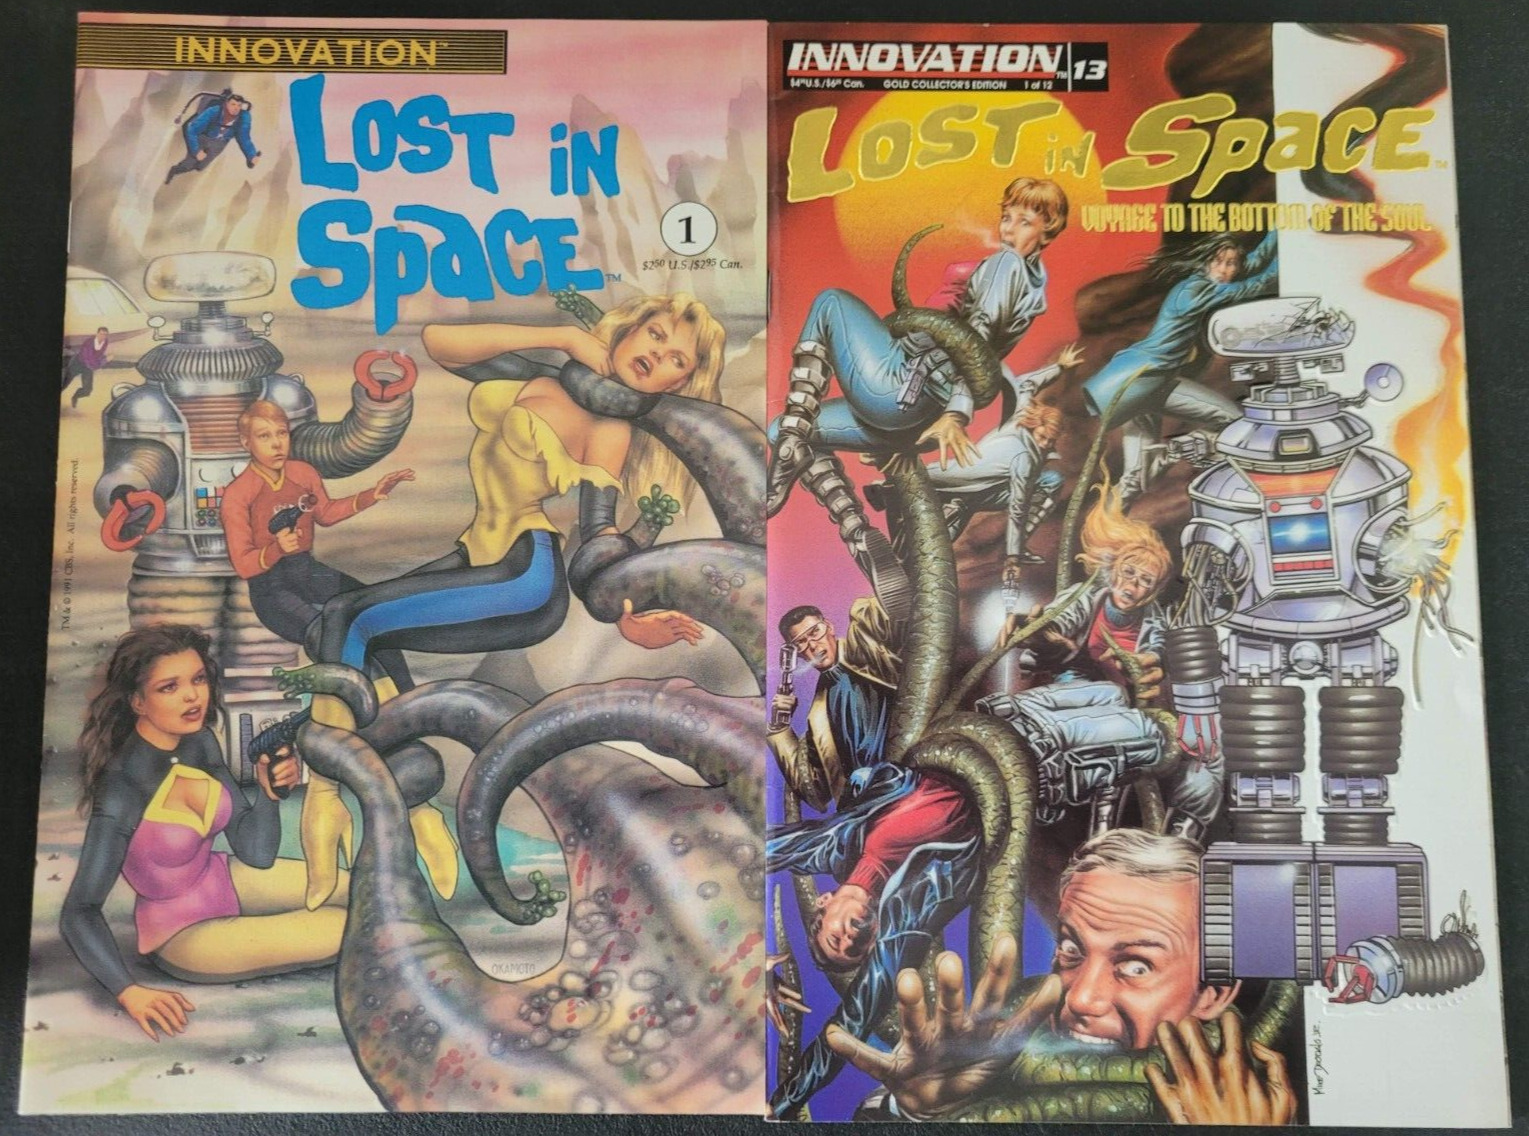 LOST IN SPACE #1 (1991) INNOVATION COMICS BONUS GOLD FOIL LOGO #13